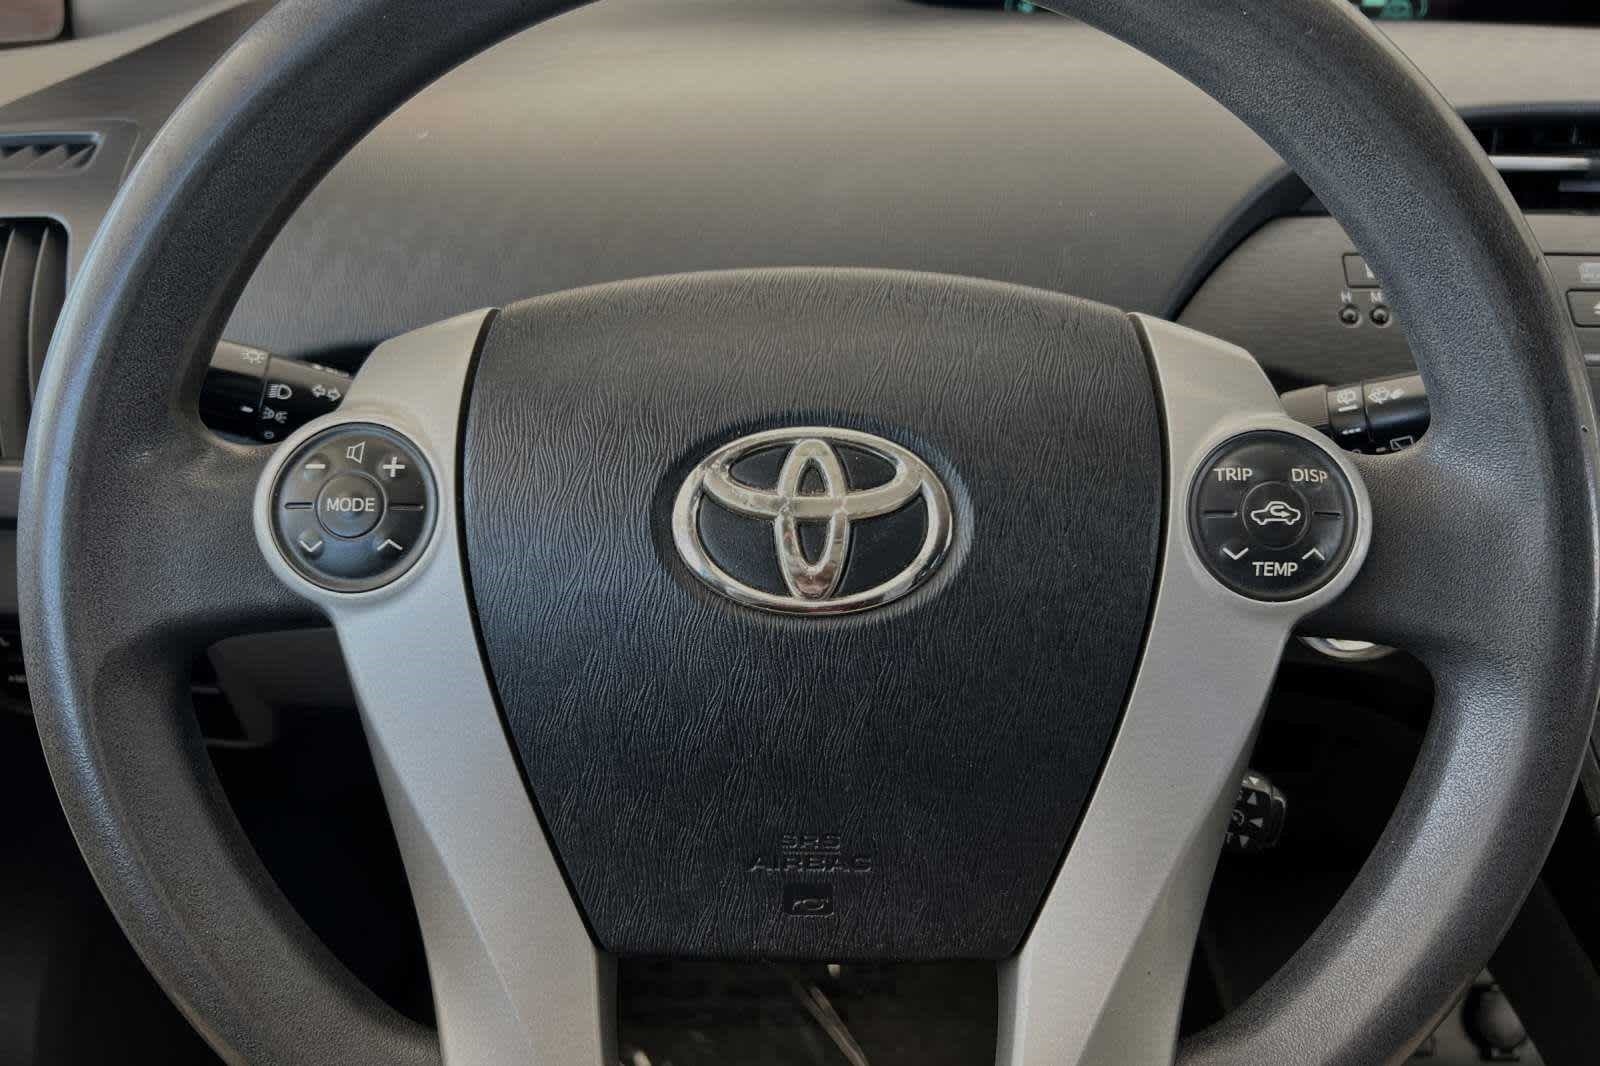 2010 Toyota Prius II